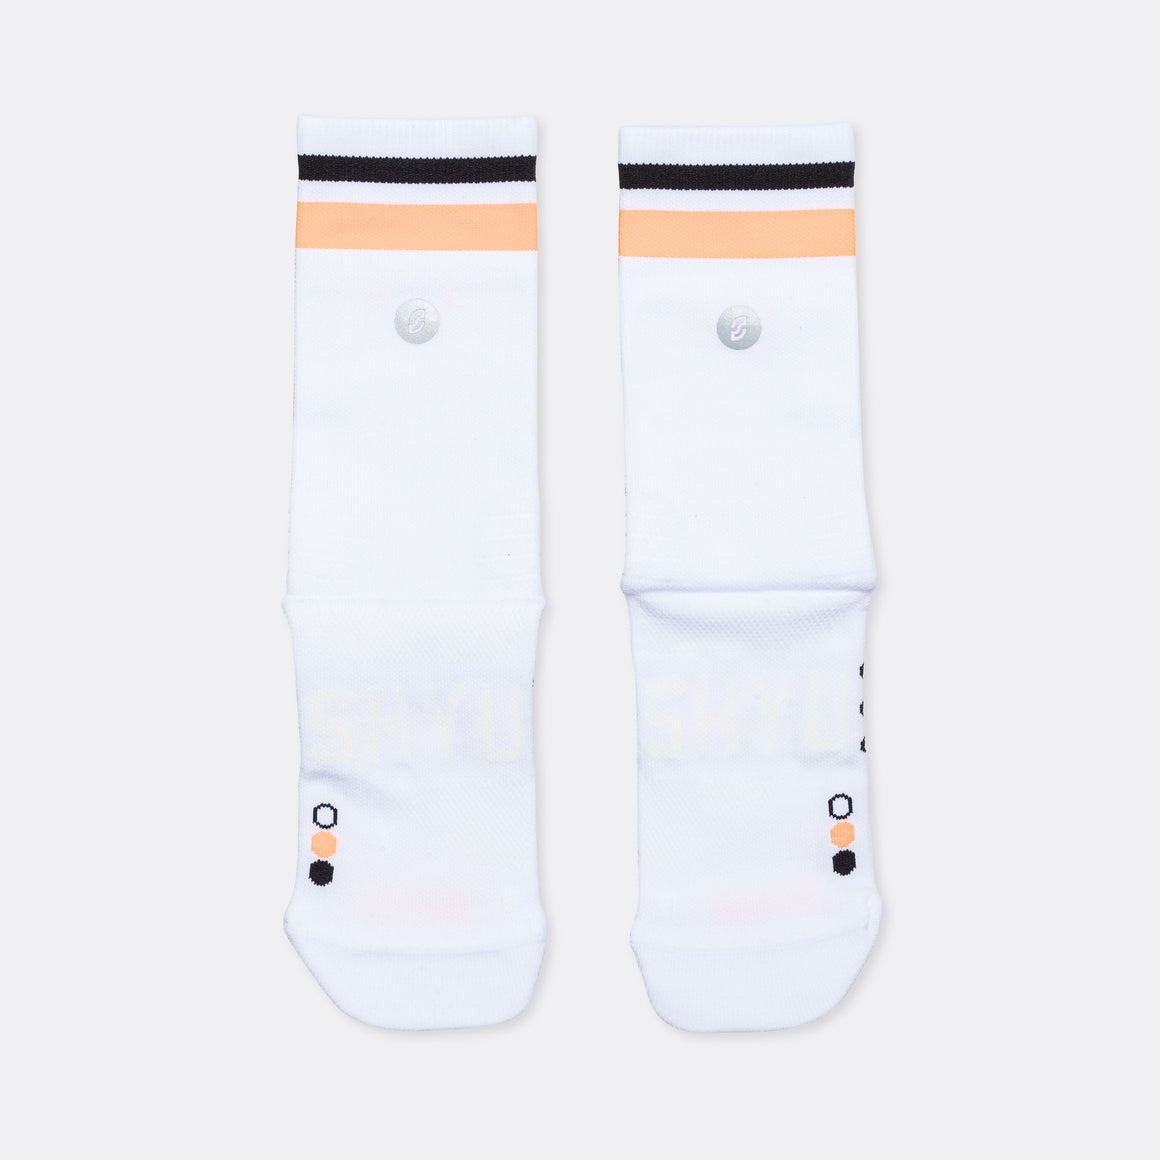 Shyu - Racing Socks - White/Orange/Black - Up There Athletics